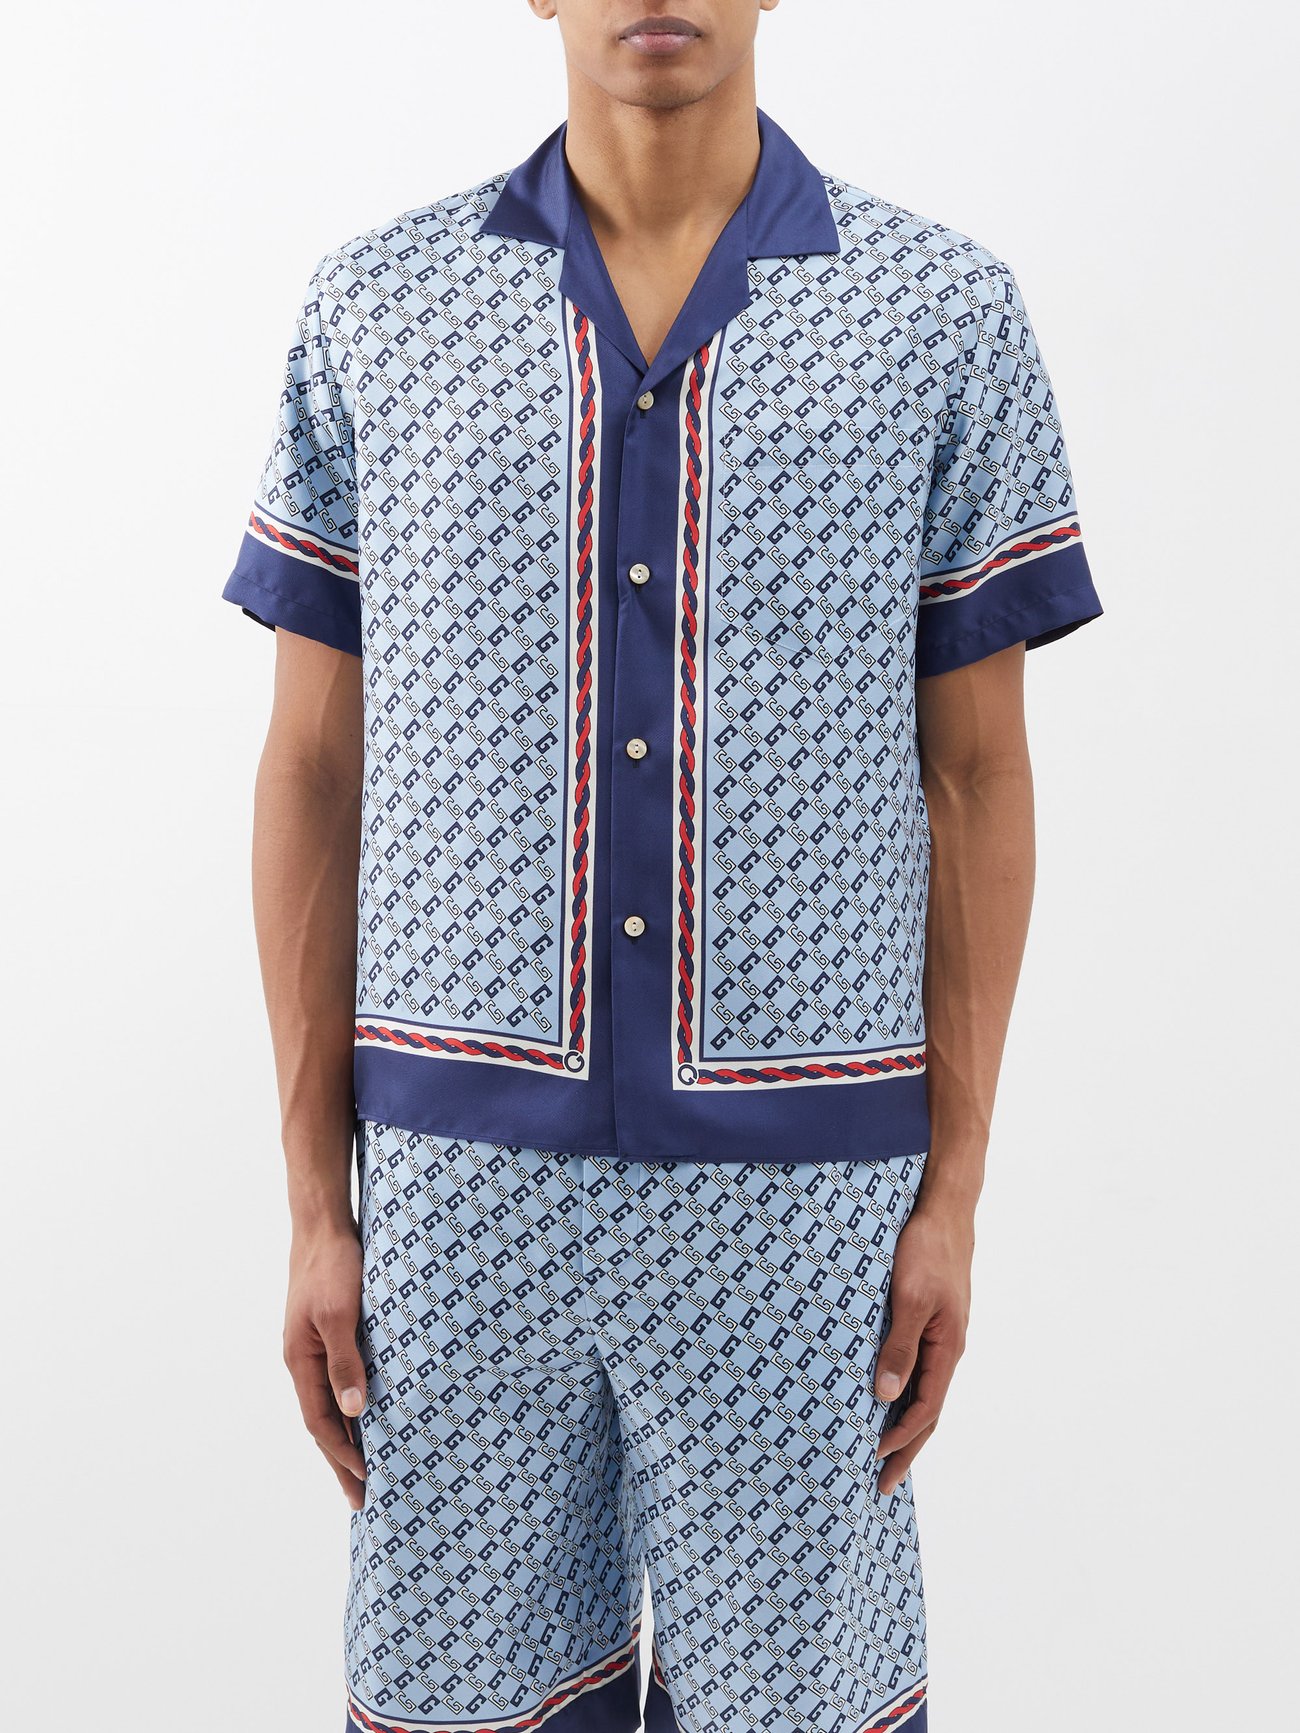 Gucci, Shirts, Gucci Woven Effect G Print Cotton Bowling Shirt